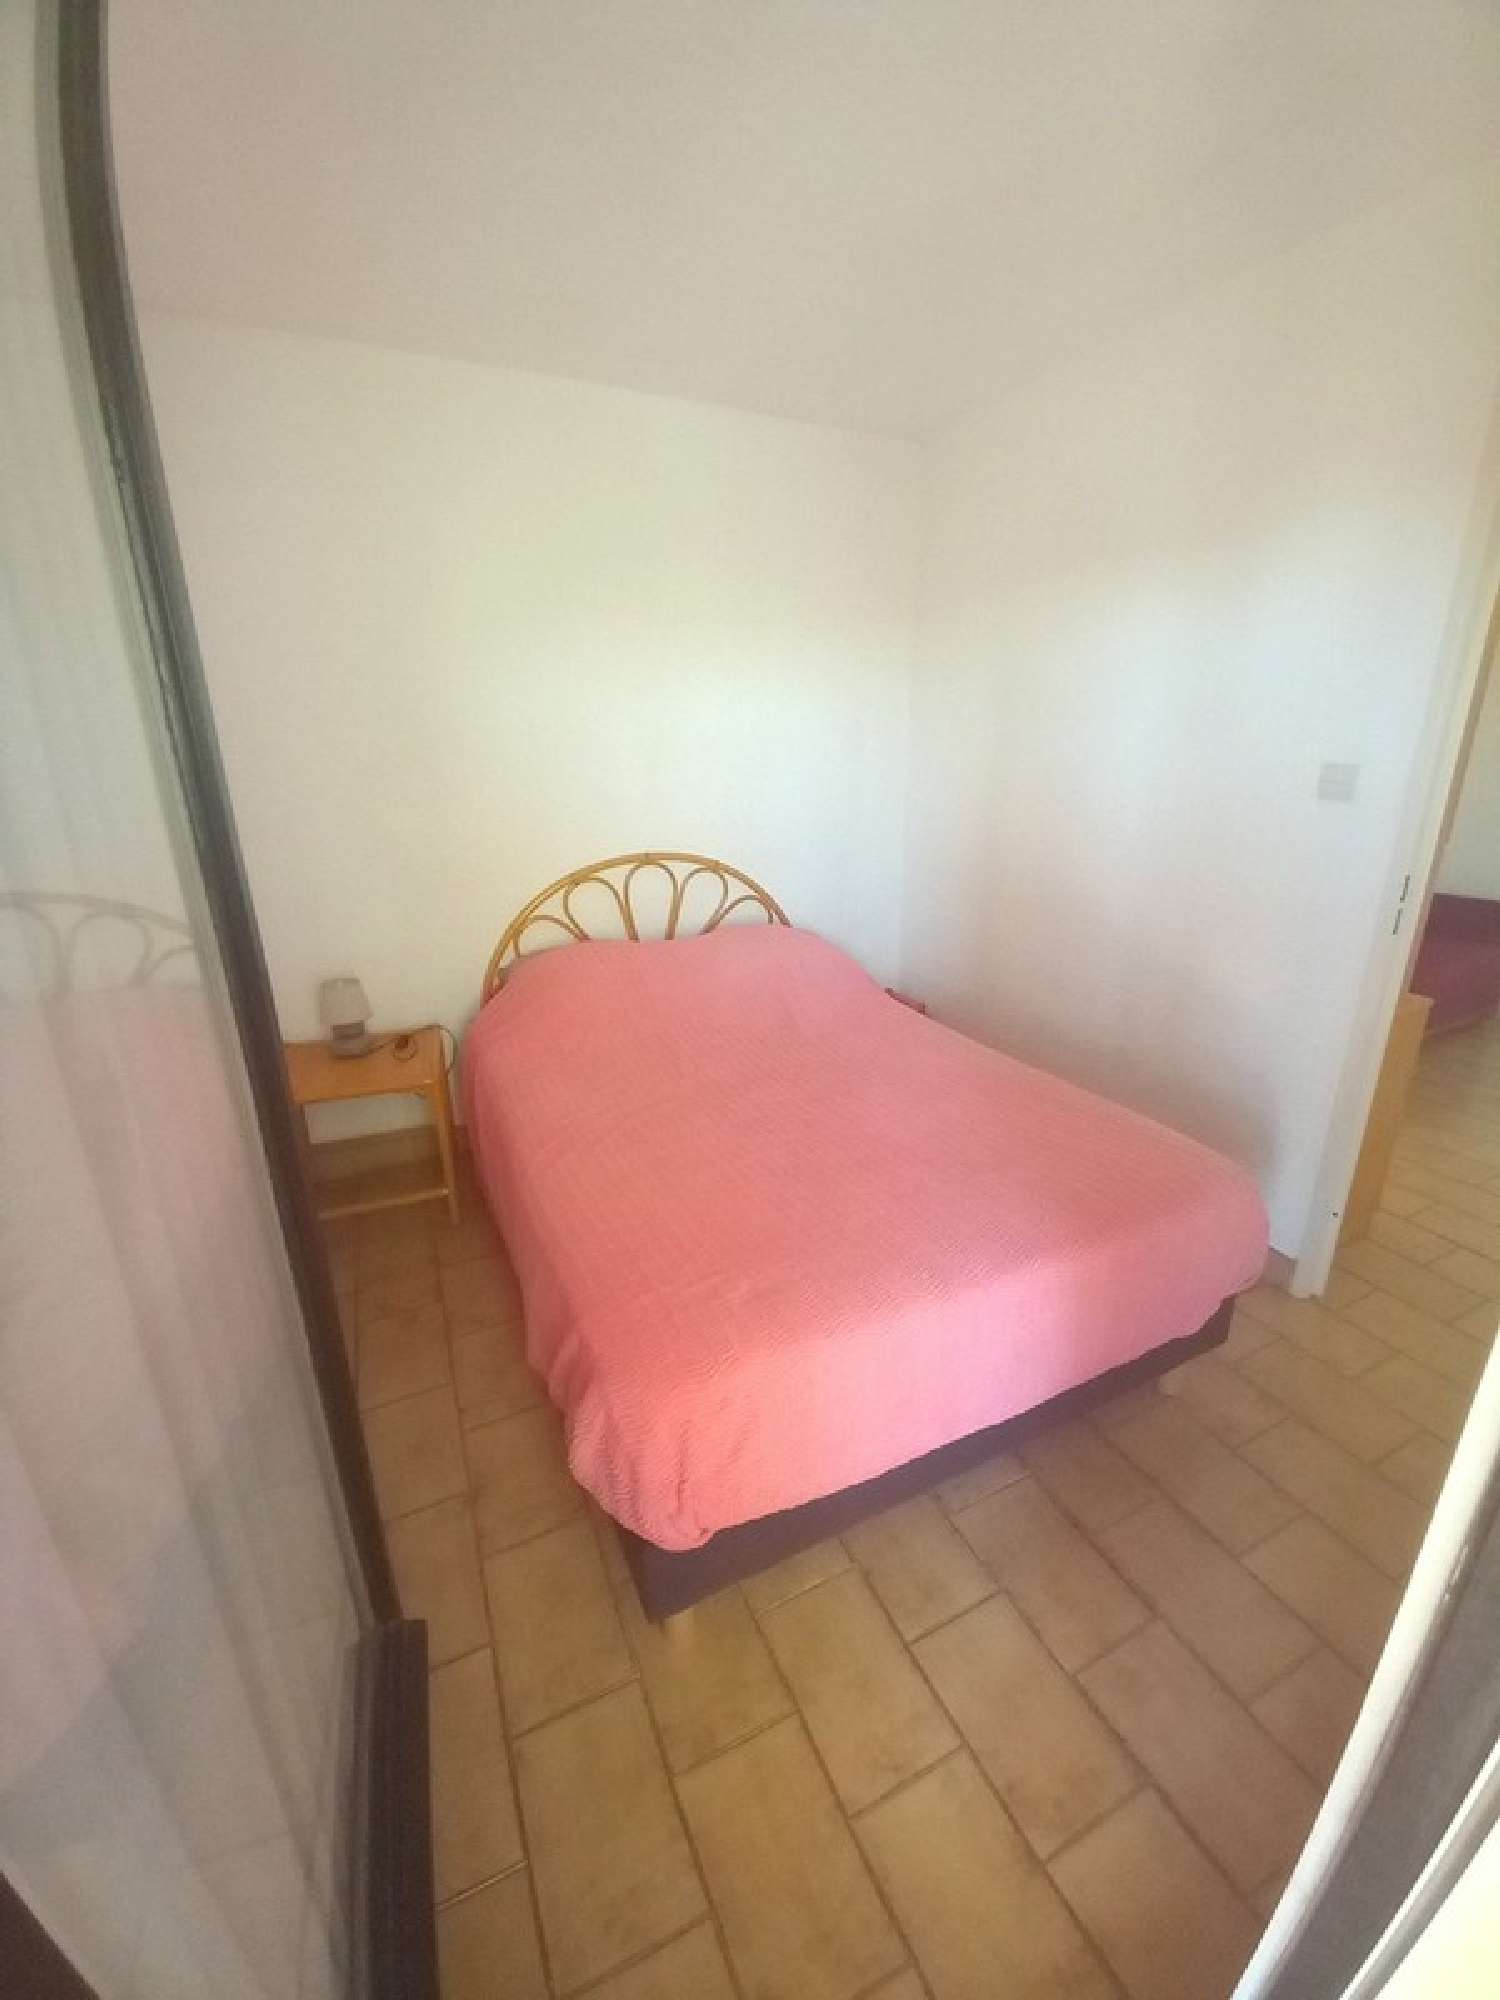  te koop appartement Le Cap d'Agde Hérault 2